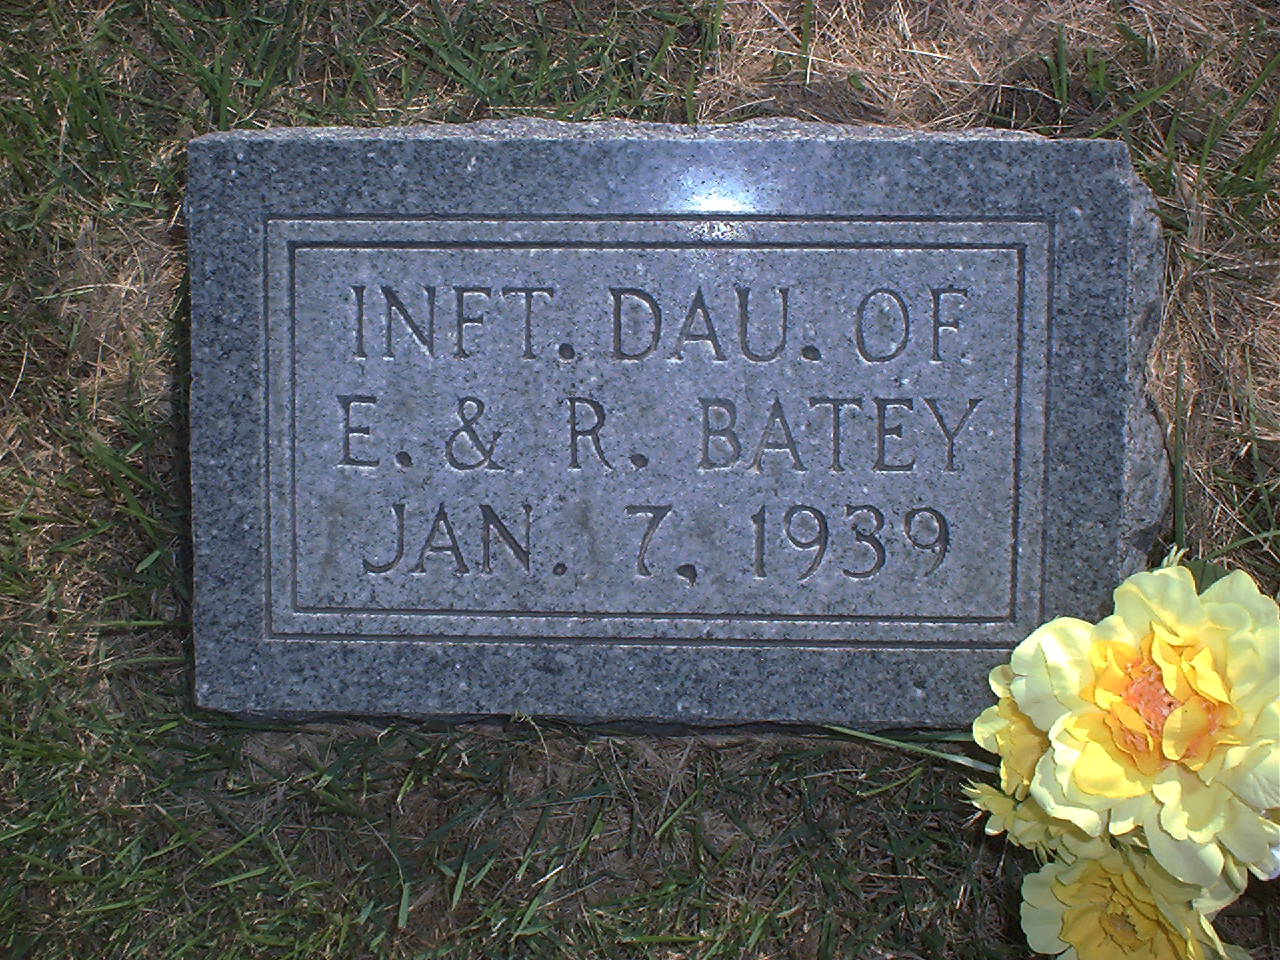 Infant Batey headstone